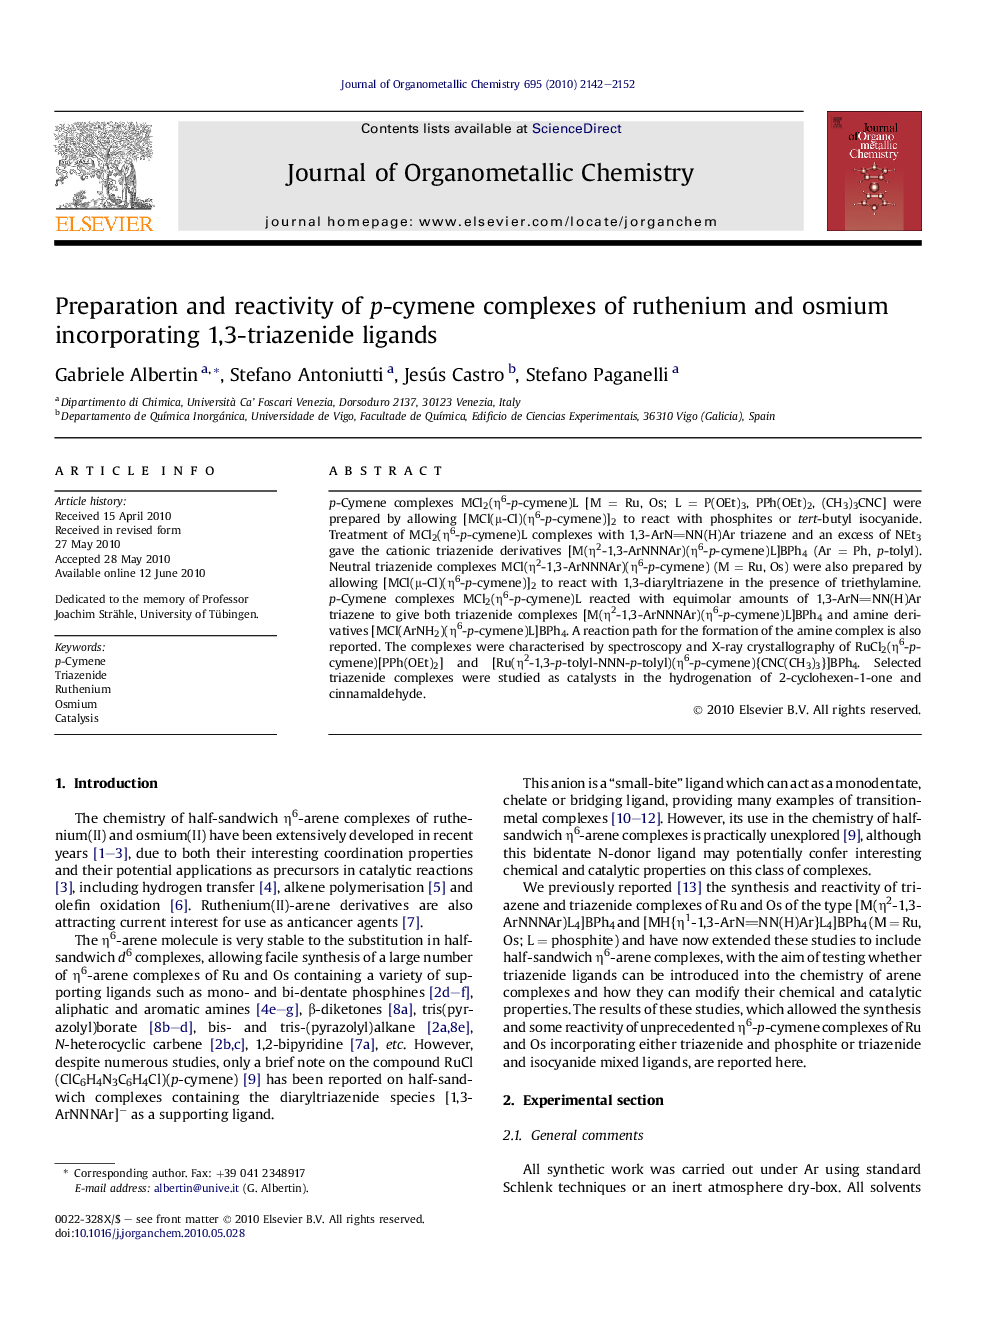 Preparation and reactivity of p-cymene complexes of ruthenium and osmium incorporating 1,3-triazenide ligands